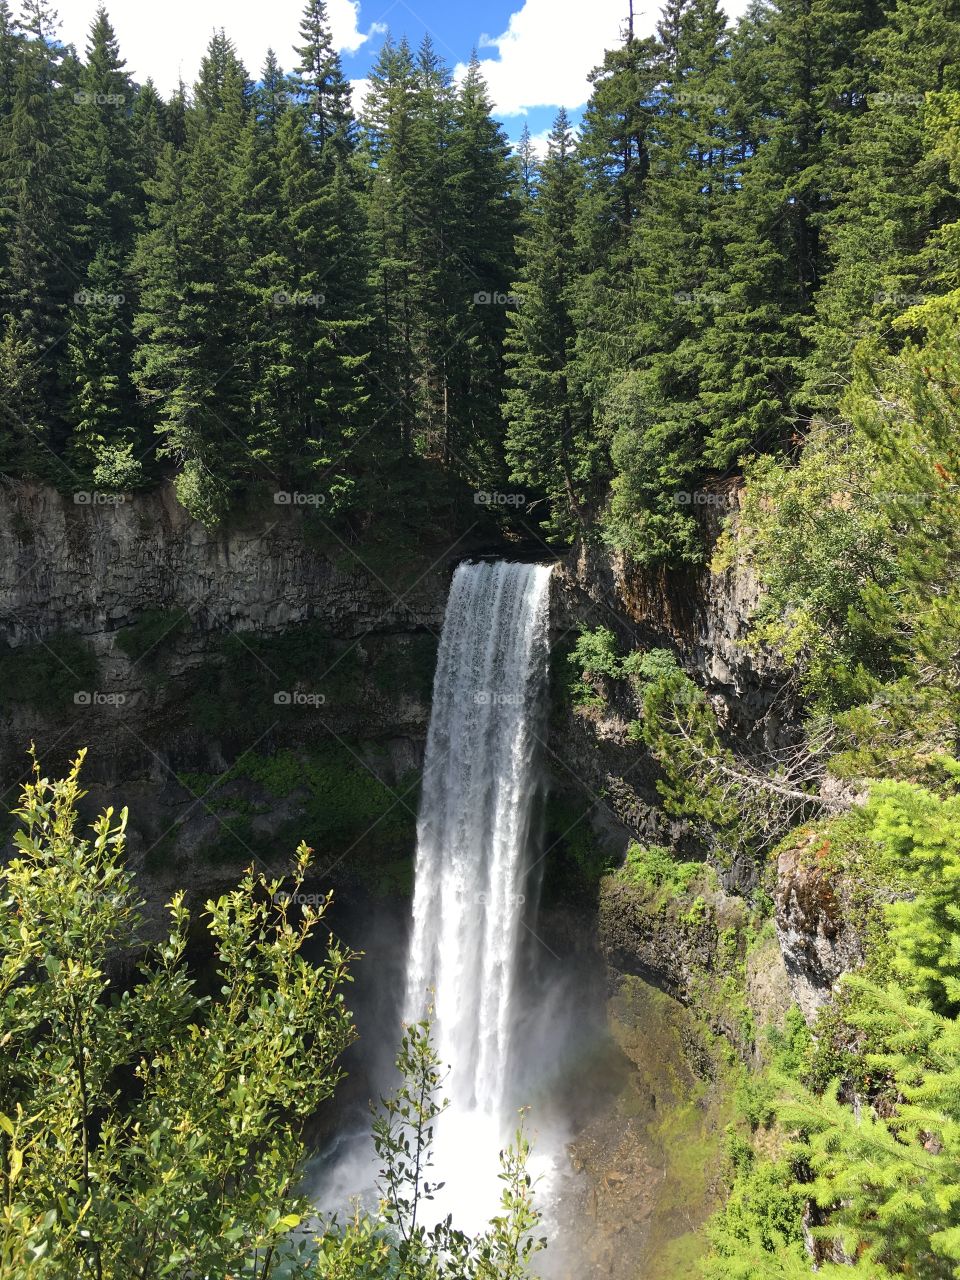 Brandywine falls - British Columbia 